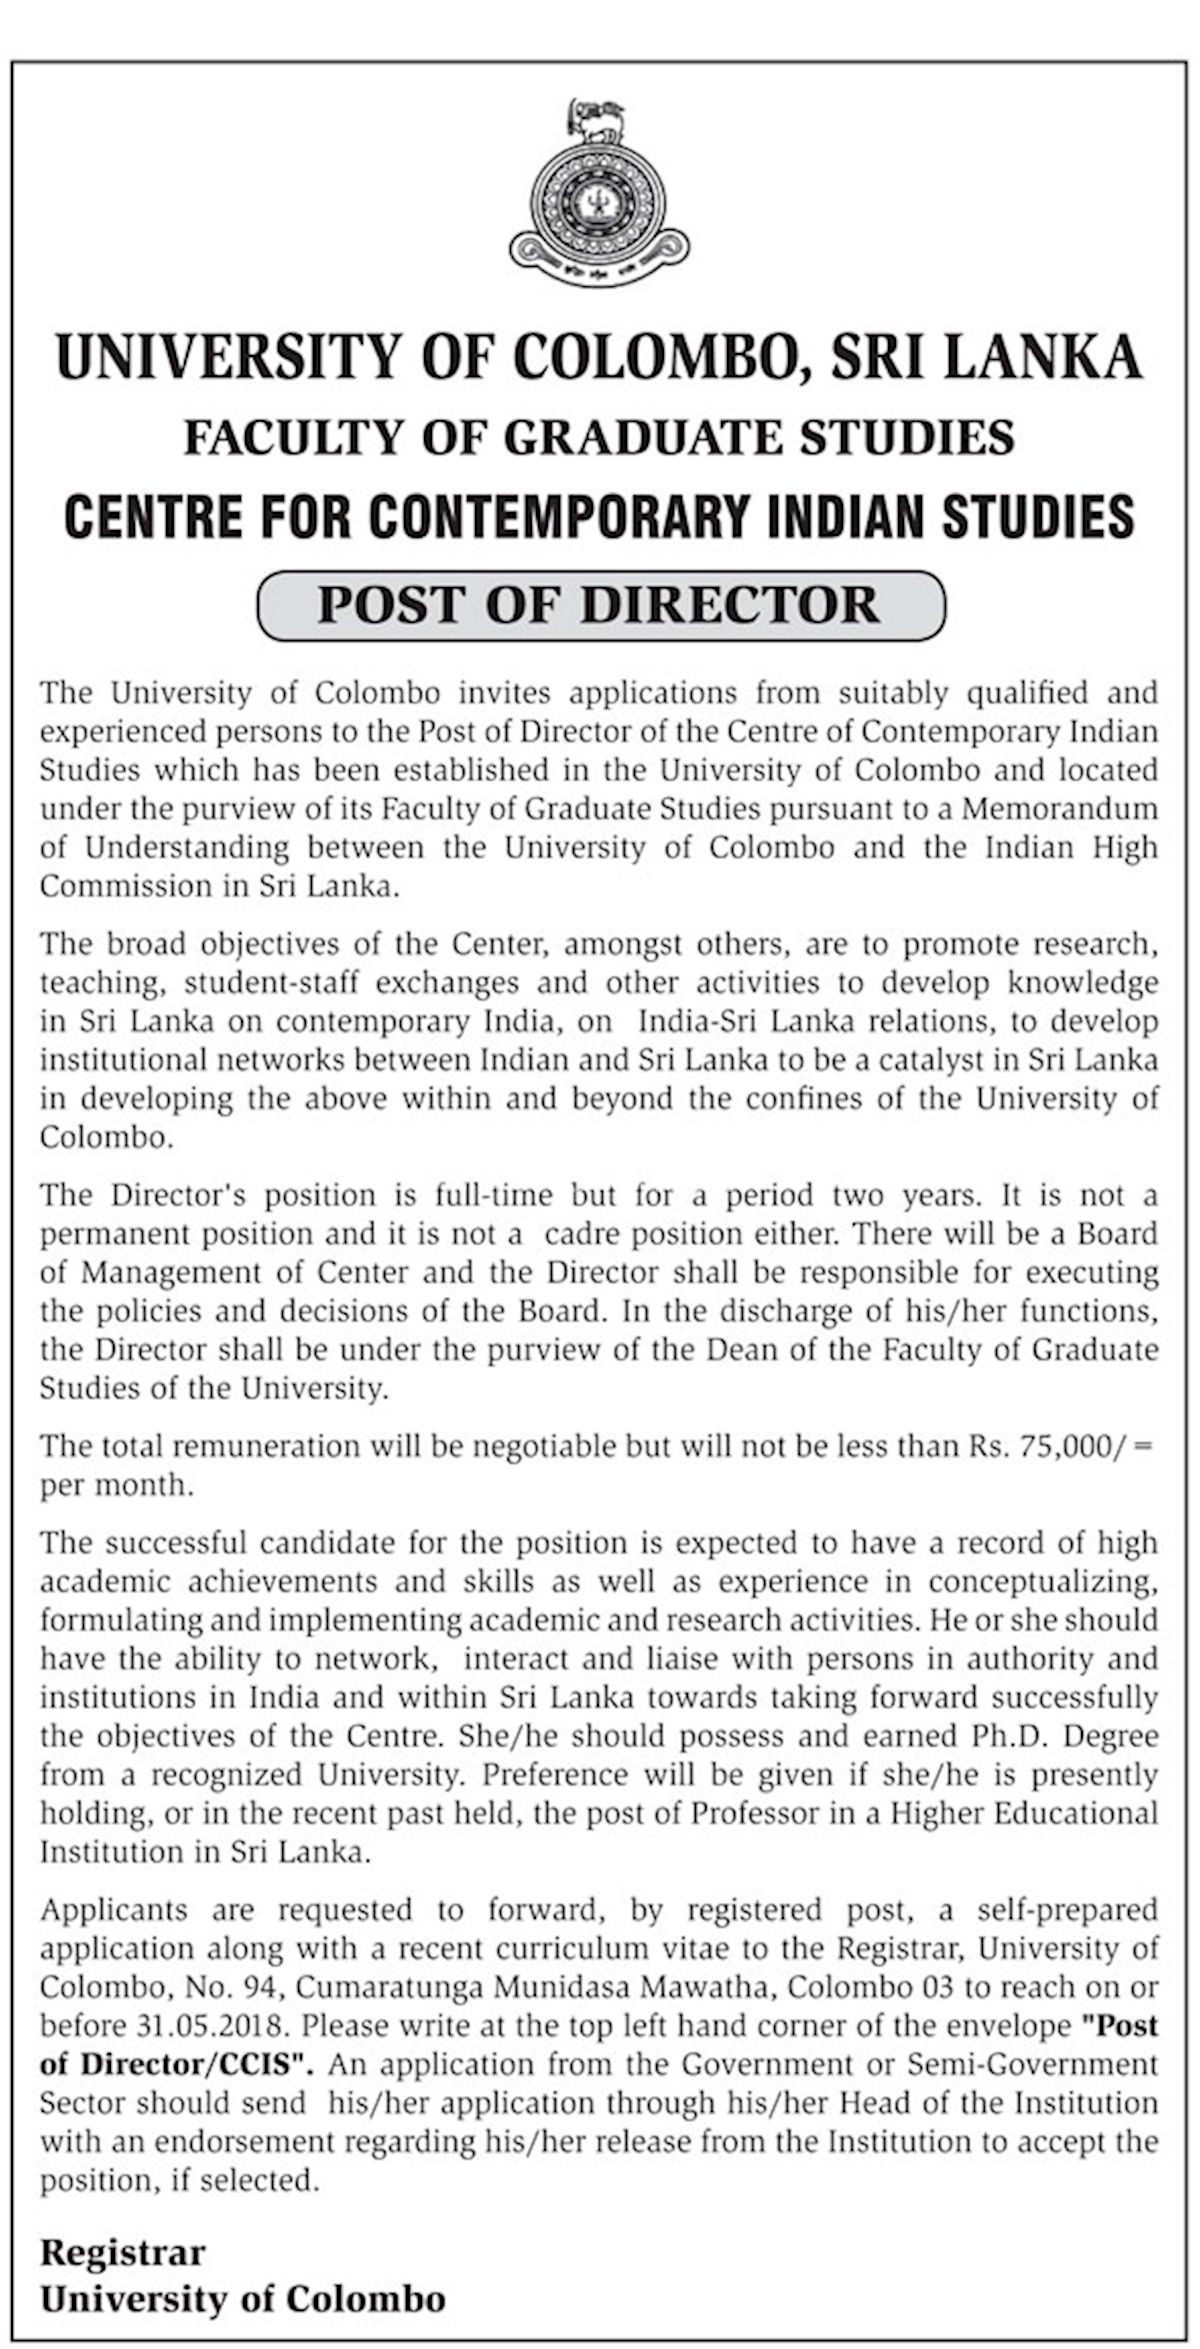 Faculty of Graduate Studies - Post of Director